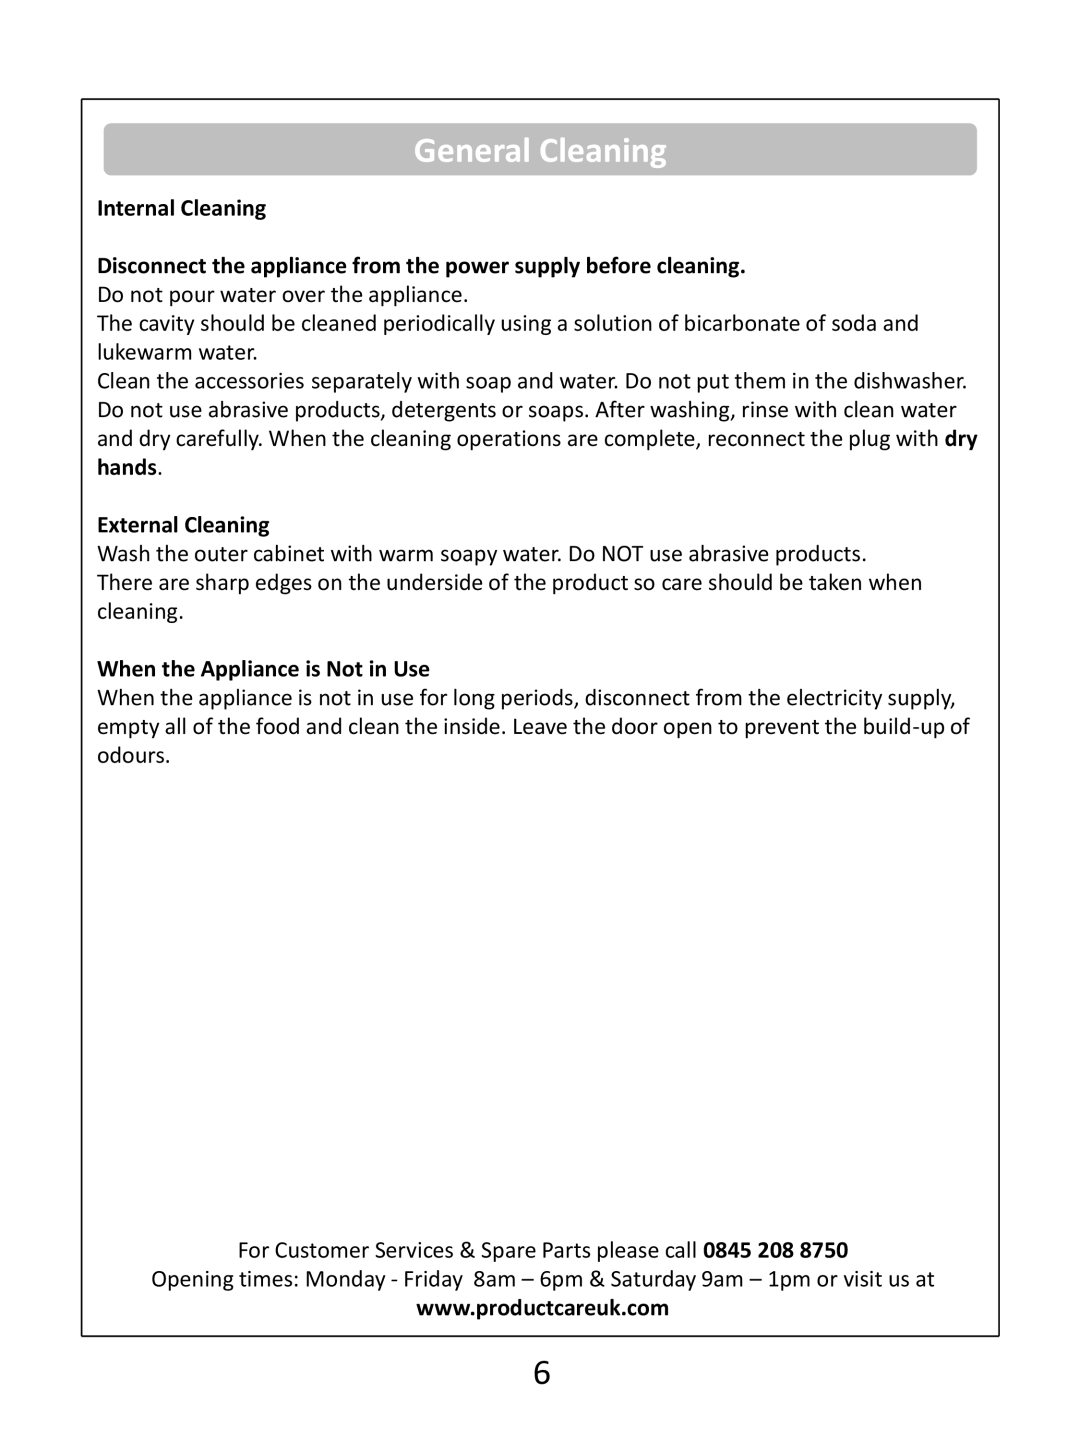 Russell Hobbs RHCF103 General Cleaning, Internal Cleaning, External Cleaning, When the Appliance is Not in Use 